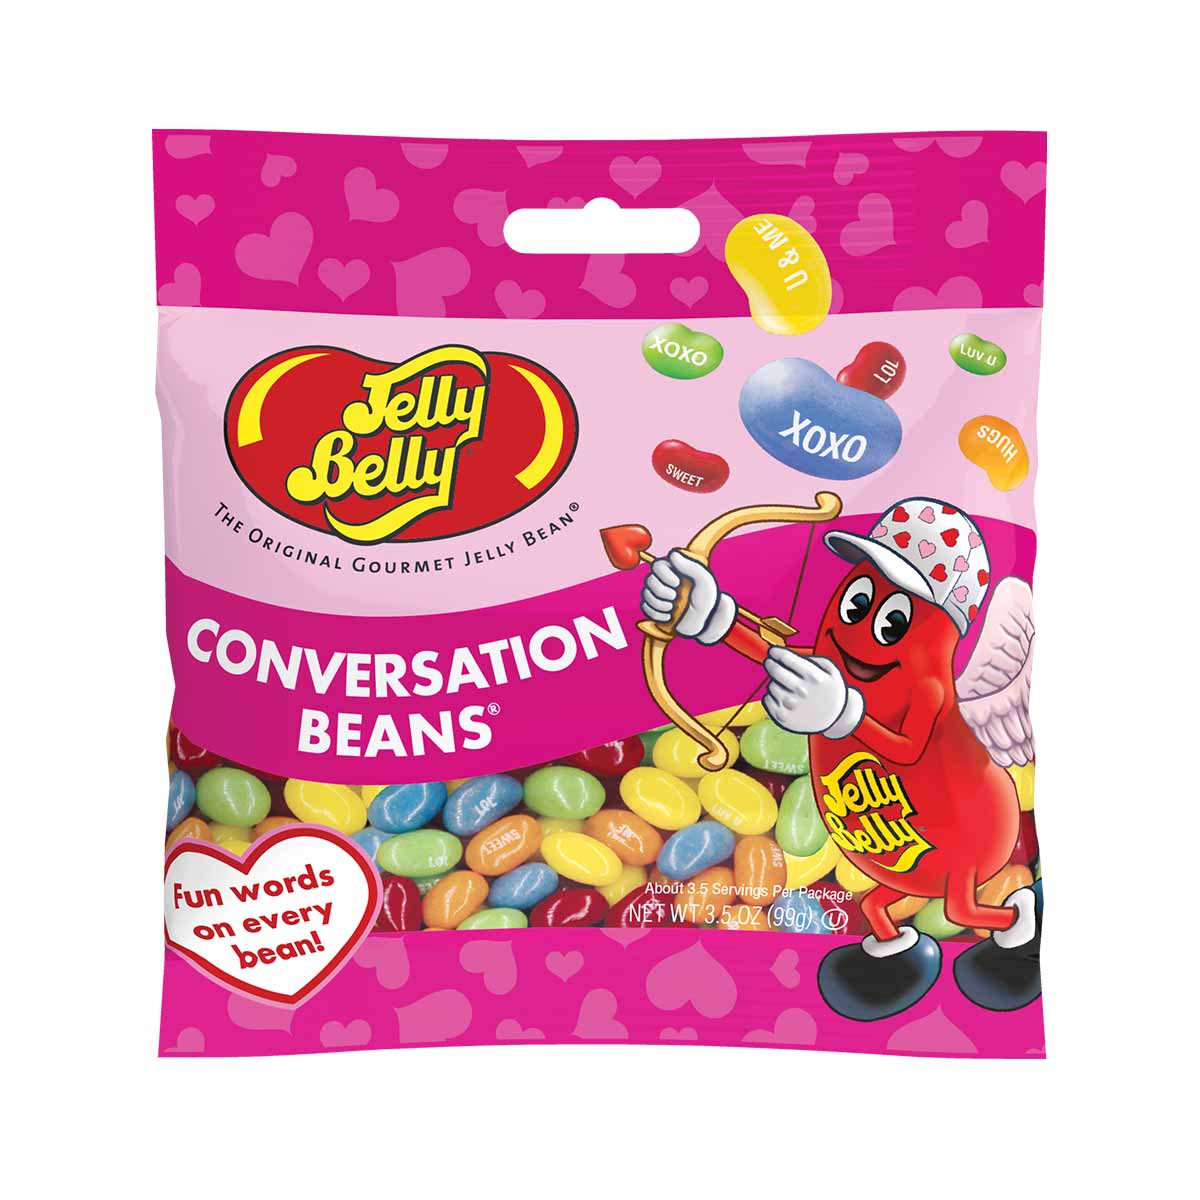 Jelly Belly Beans bonbon saveur poire